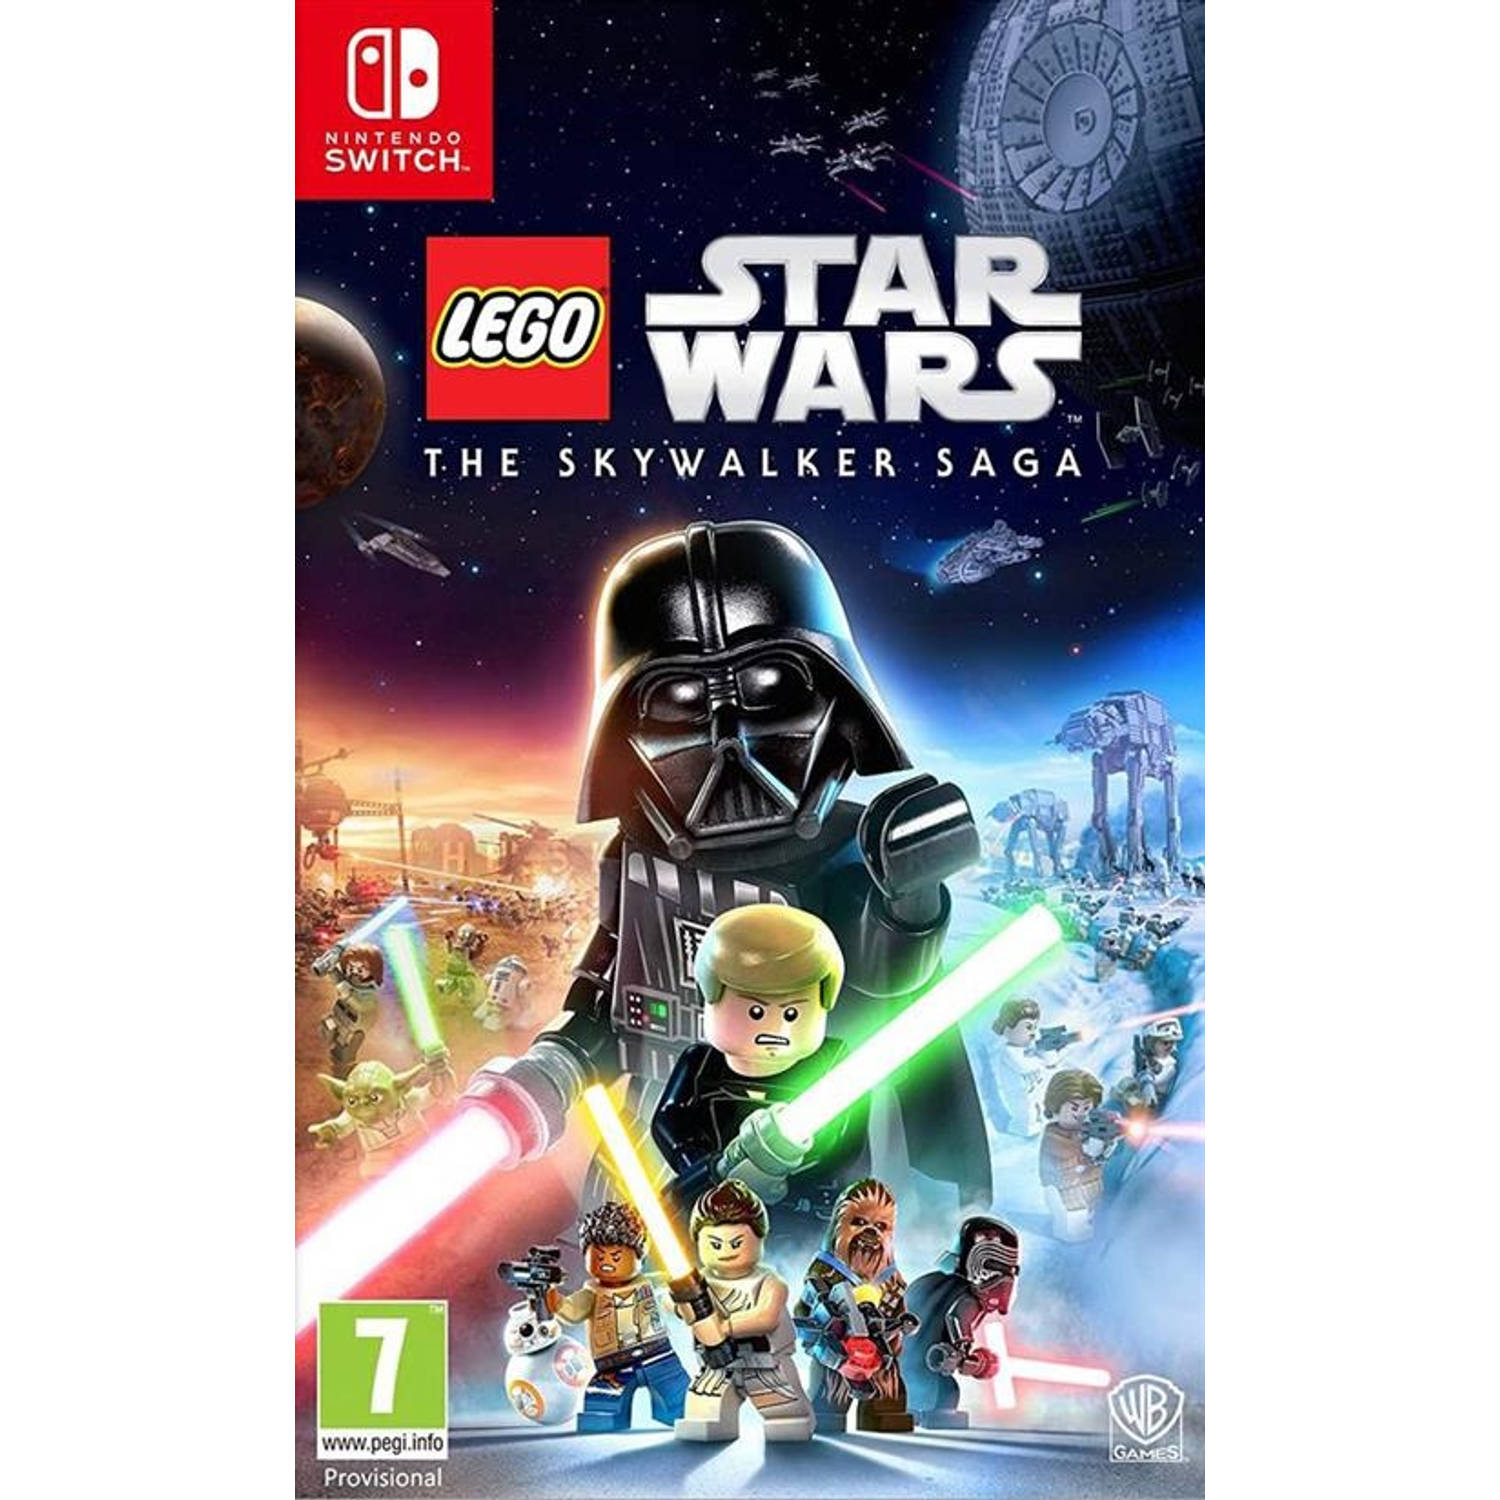 LEGO Star Wars The Skywalker saga, (Nintendo Switch). SWITCH